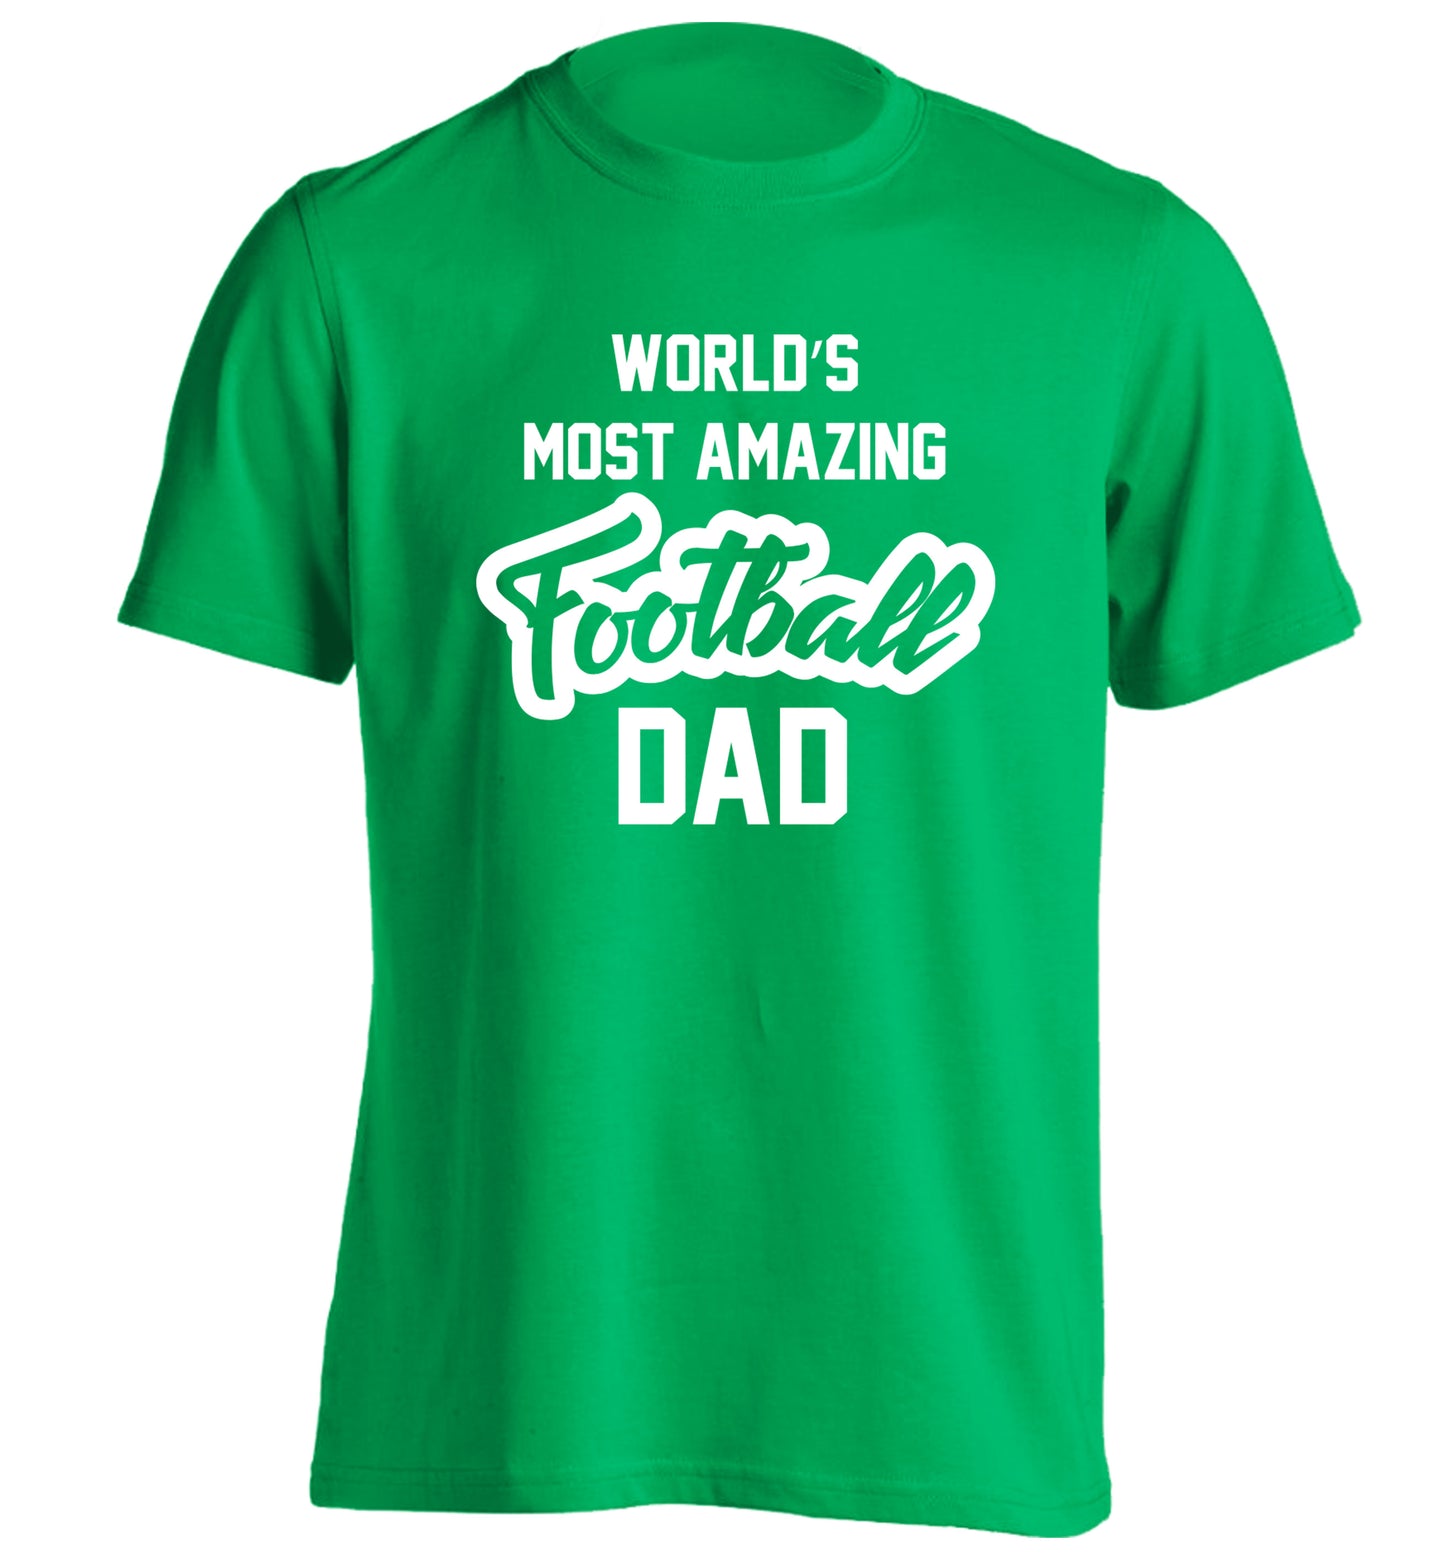 Worlds most amazing football dad adults unisexgreen Tshirt 2XL